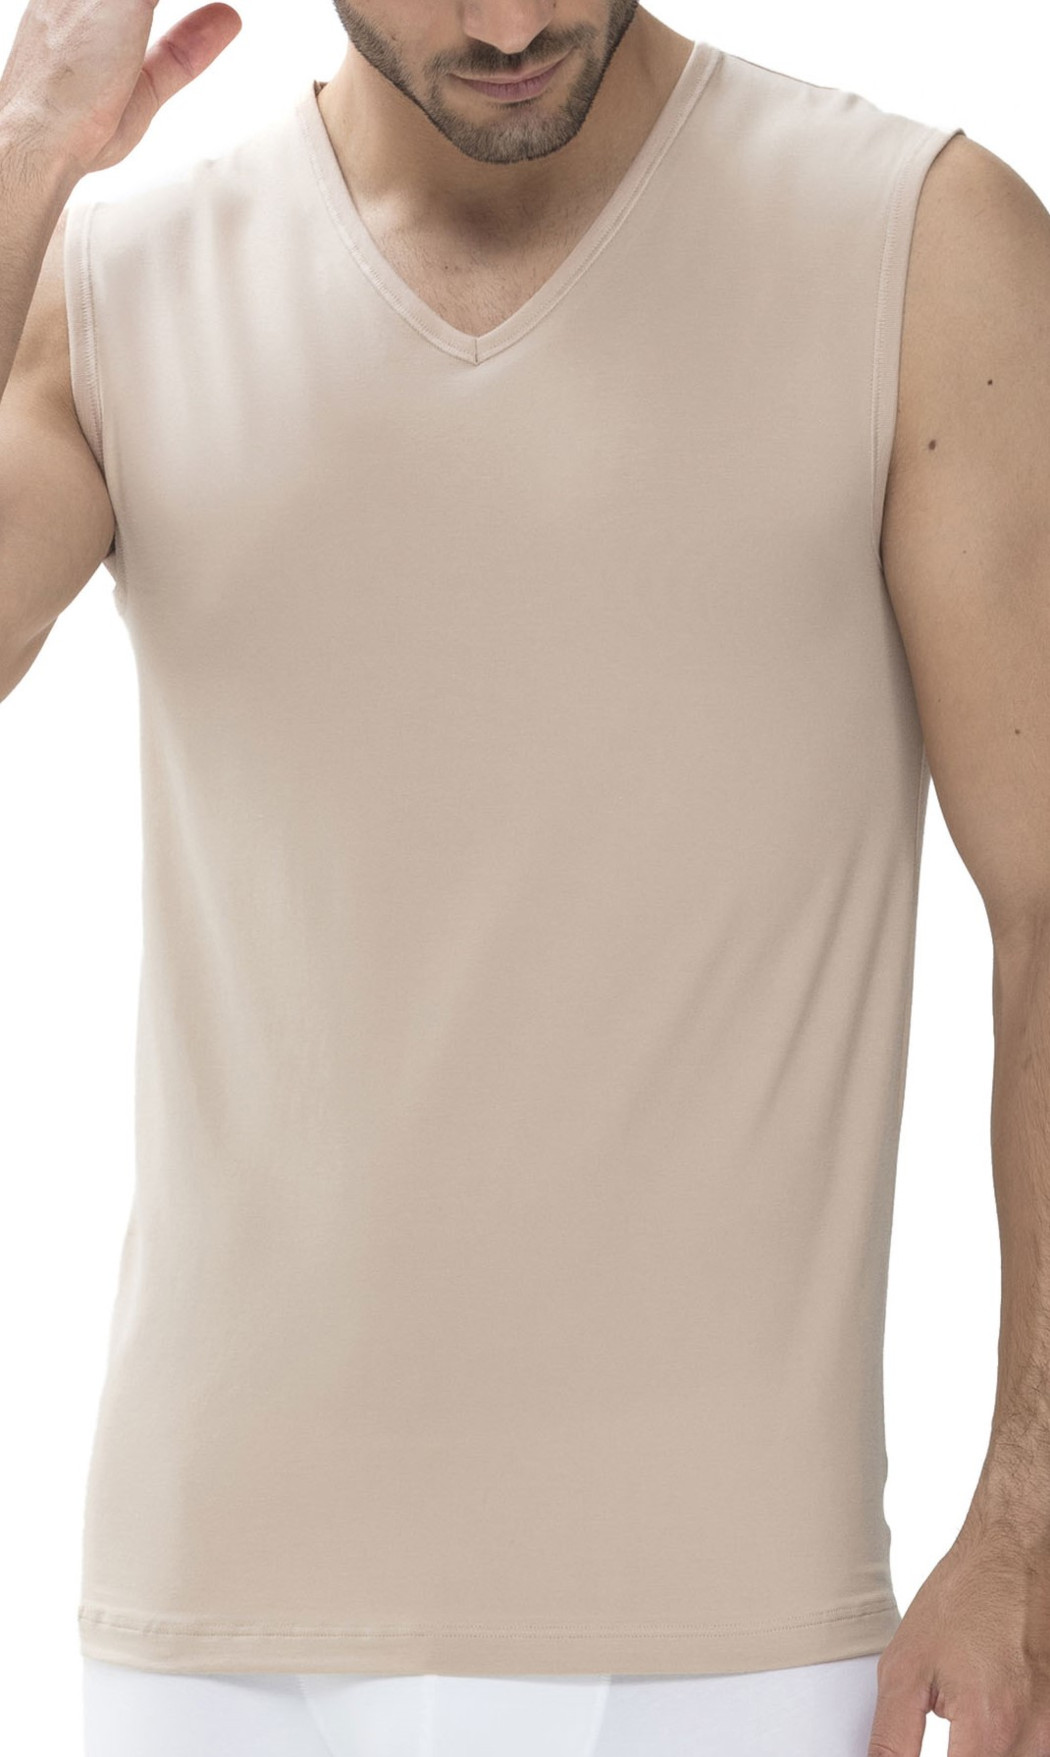 Mey Serie Dry Cotton Herren Muskel-Shirt